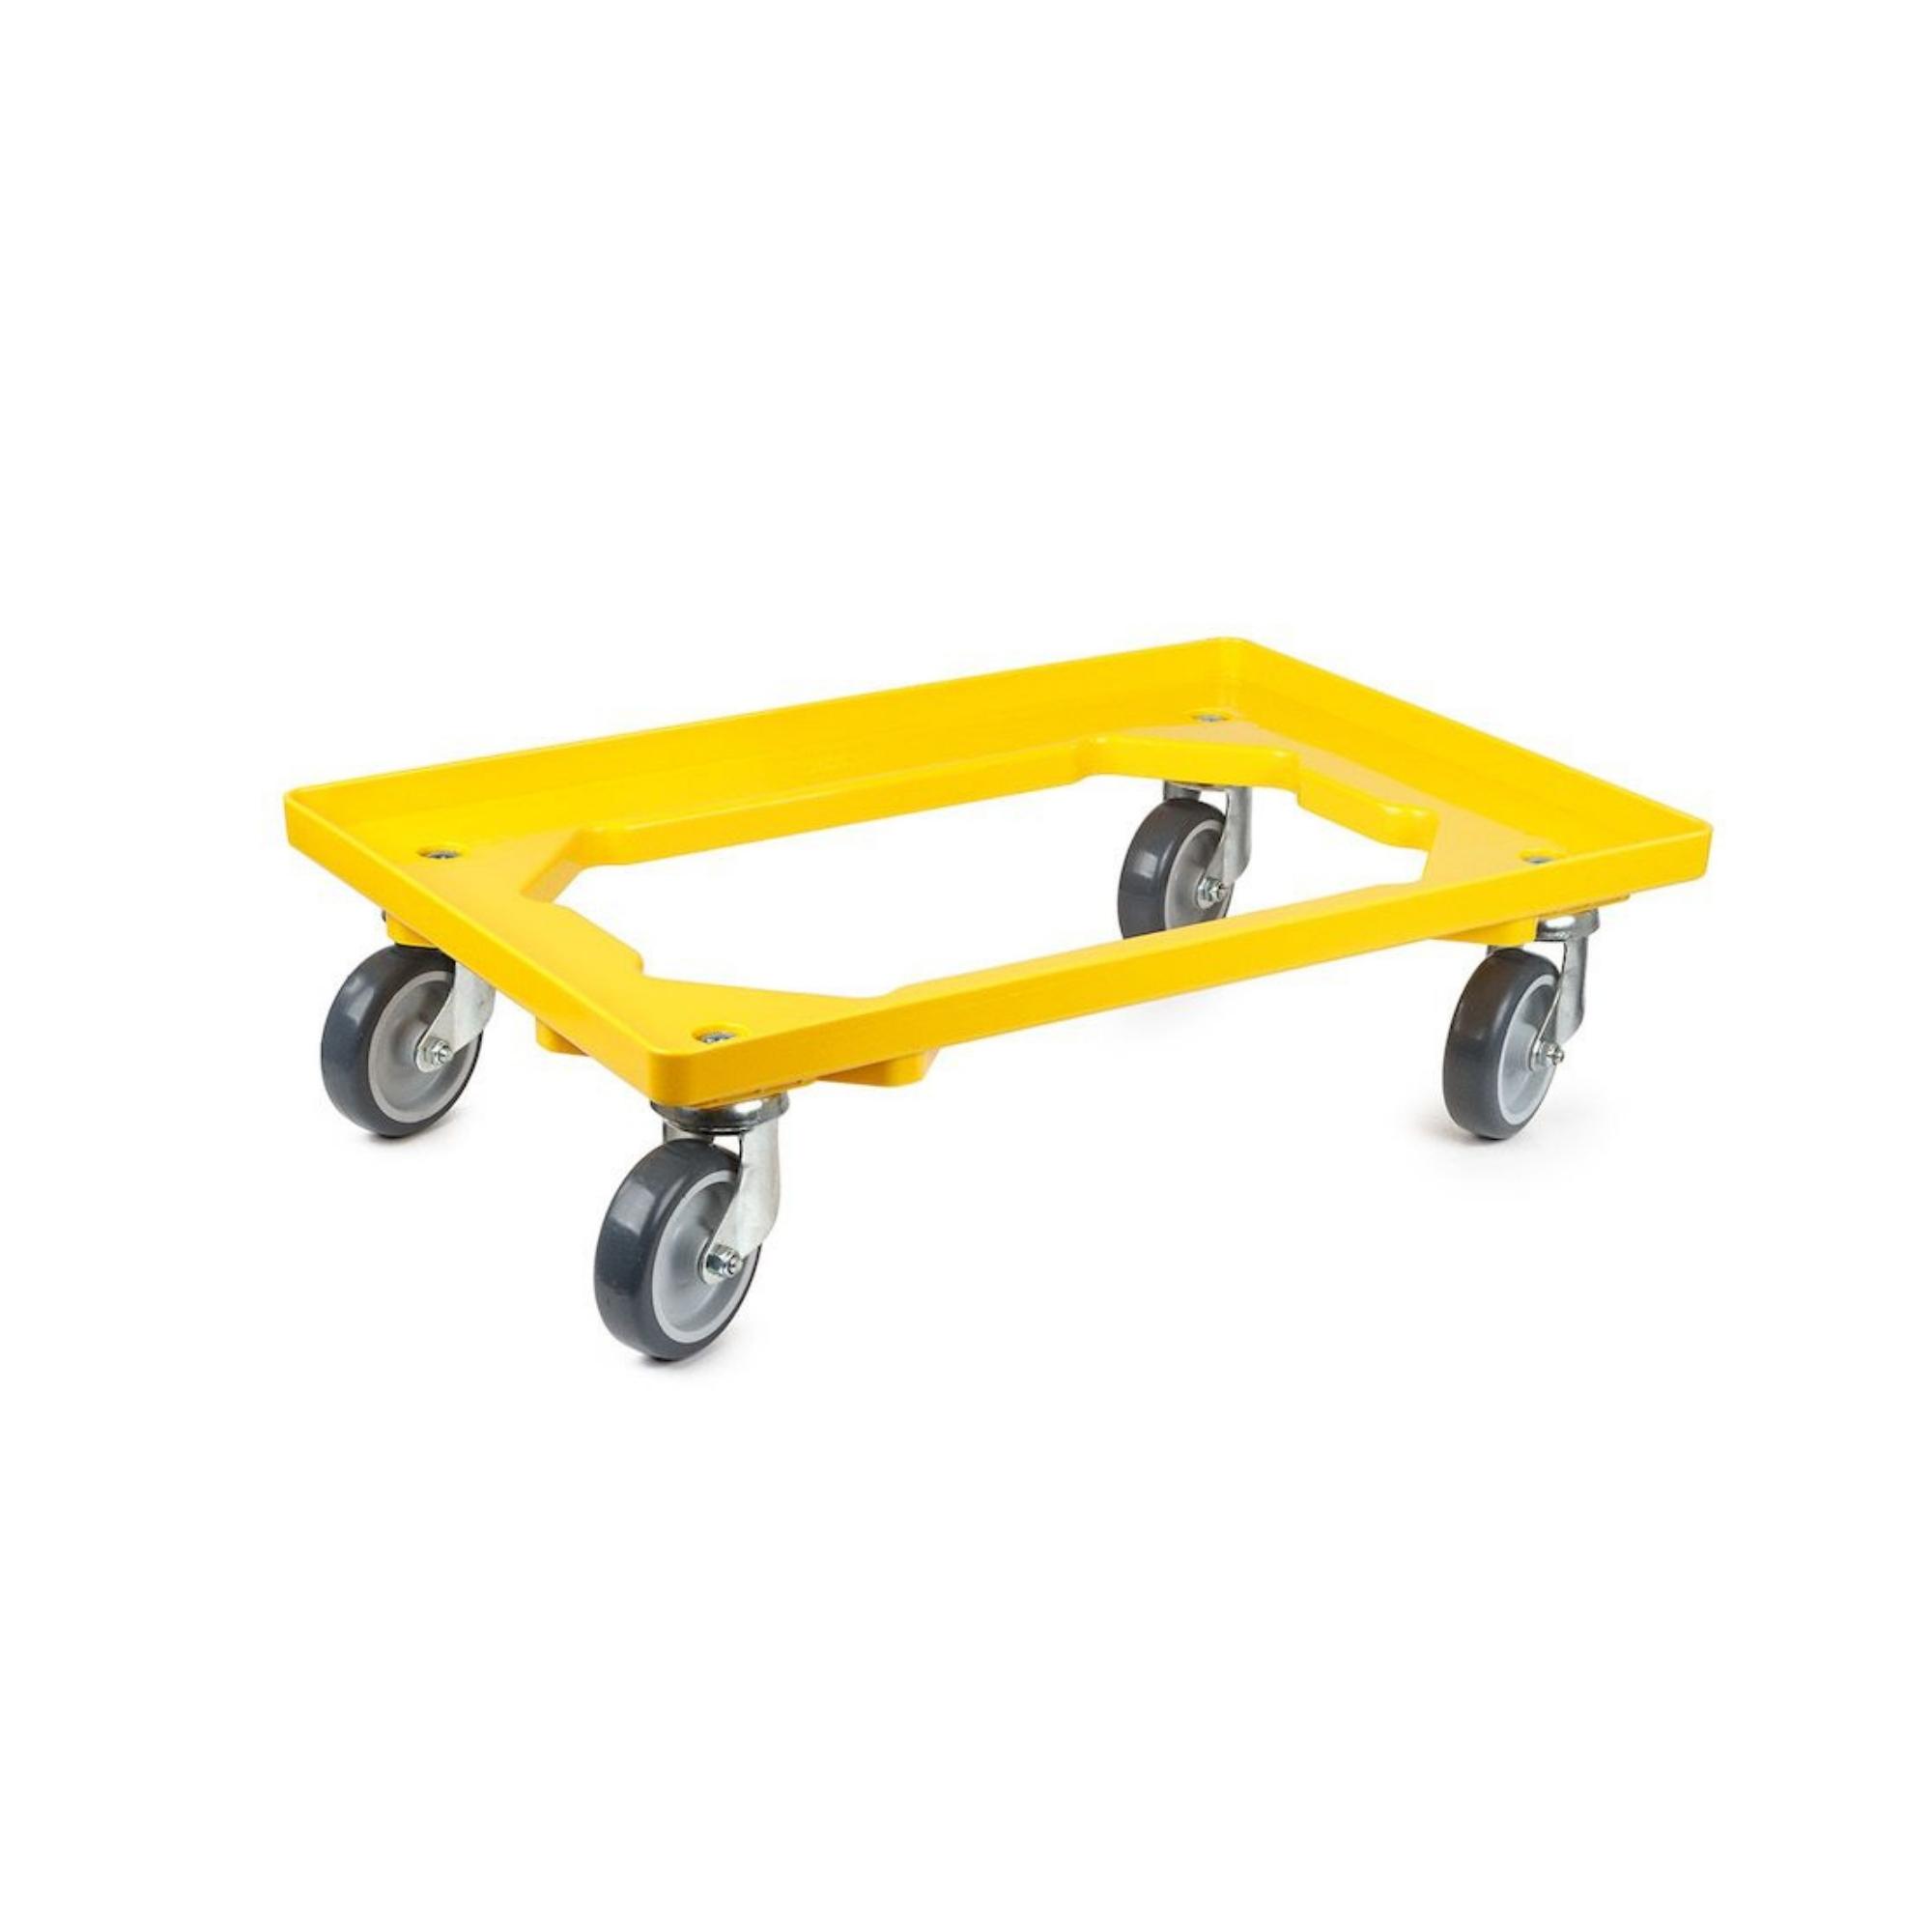 SparSet 10x Transportroller für Euroboxen 60x40cm mit Gummiräder gelb | Offenes Deck | 4 Lenkrollen | Traglast 300kg | Kistenroller Logistikroller Rollwagen Profi-Fahrgestell